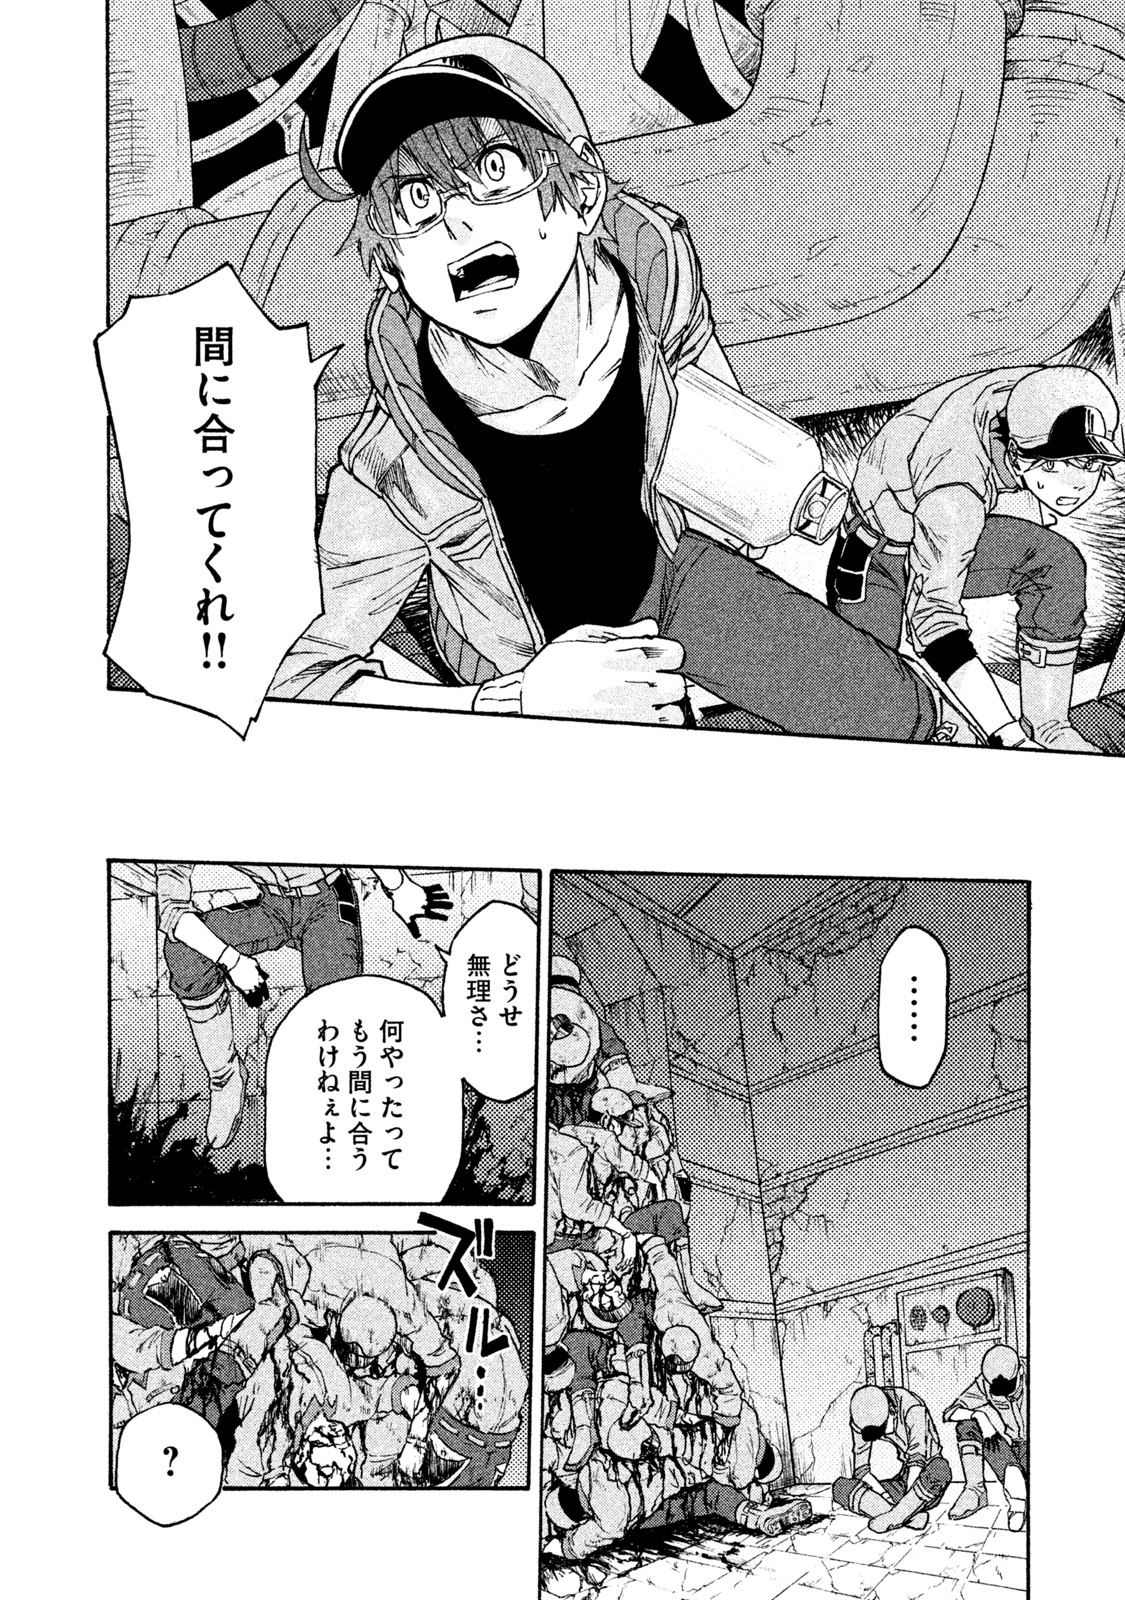 Hataraku Saibou BLACK - Chapter 17 - Page 14